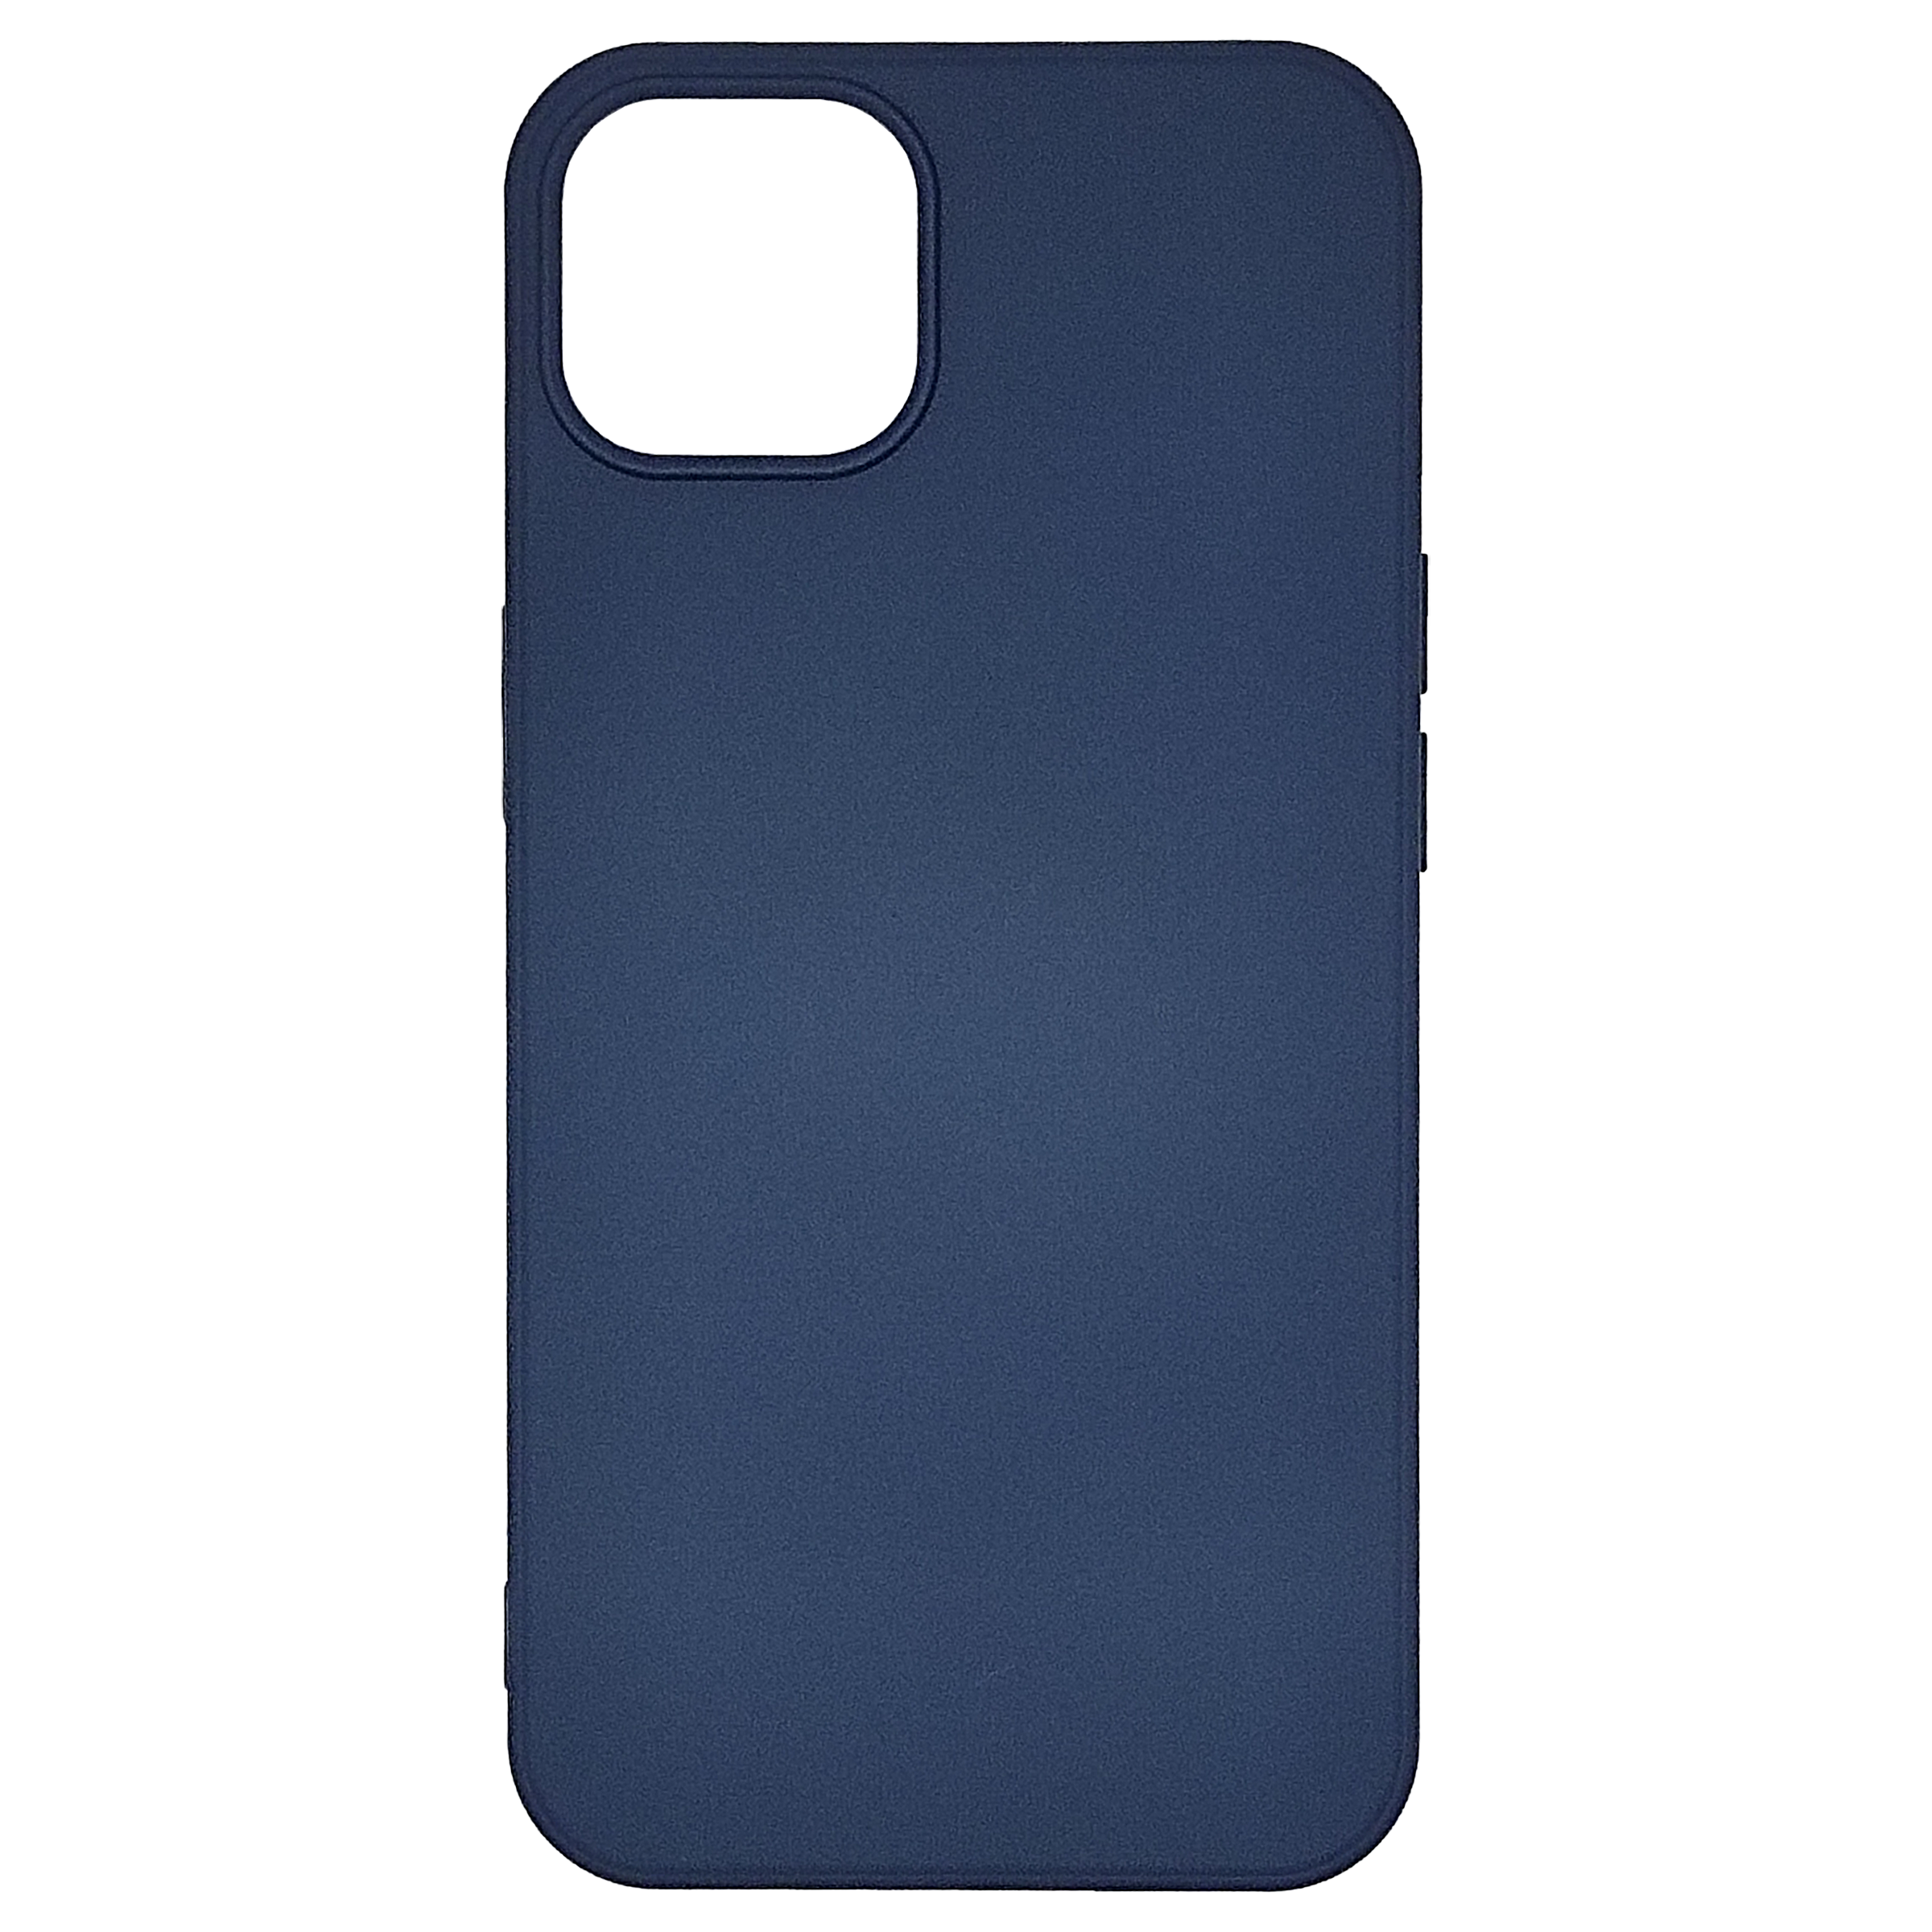 Soundrevo TPU Back Case For iPhone 13 Mini (Anti-Slip, C013M, Blue)